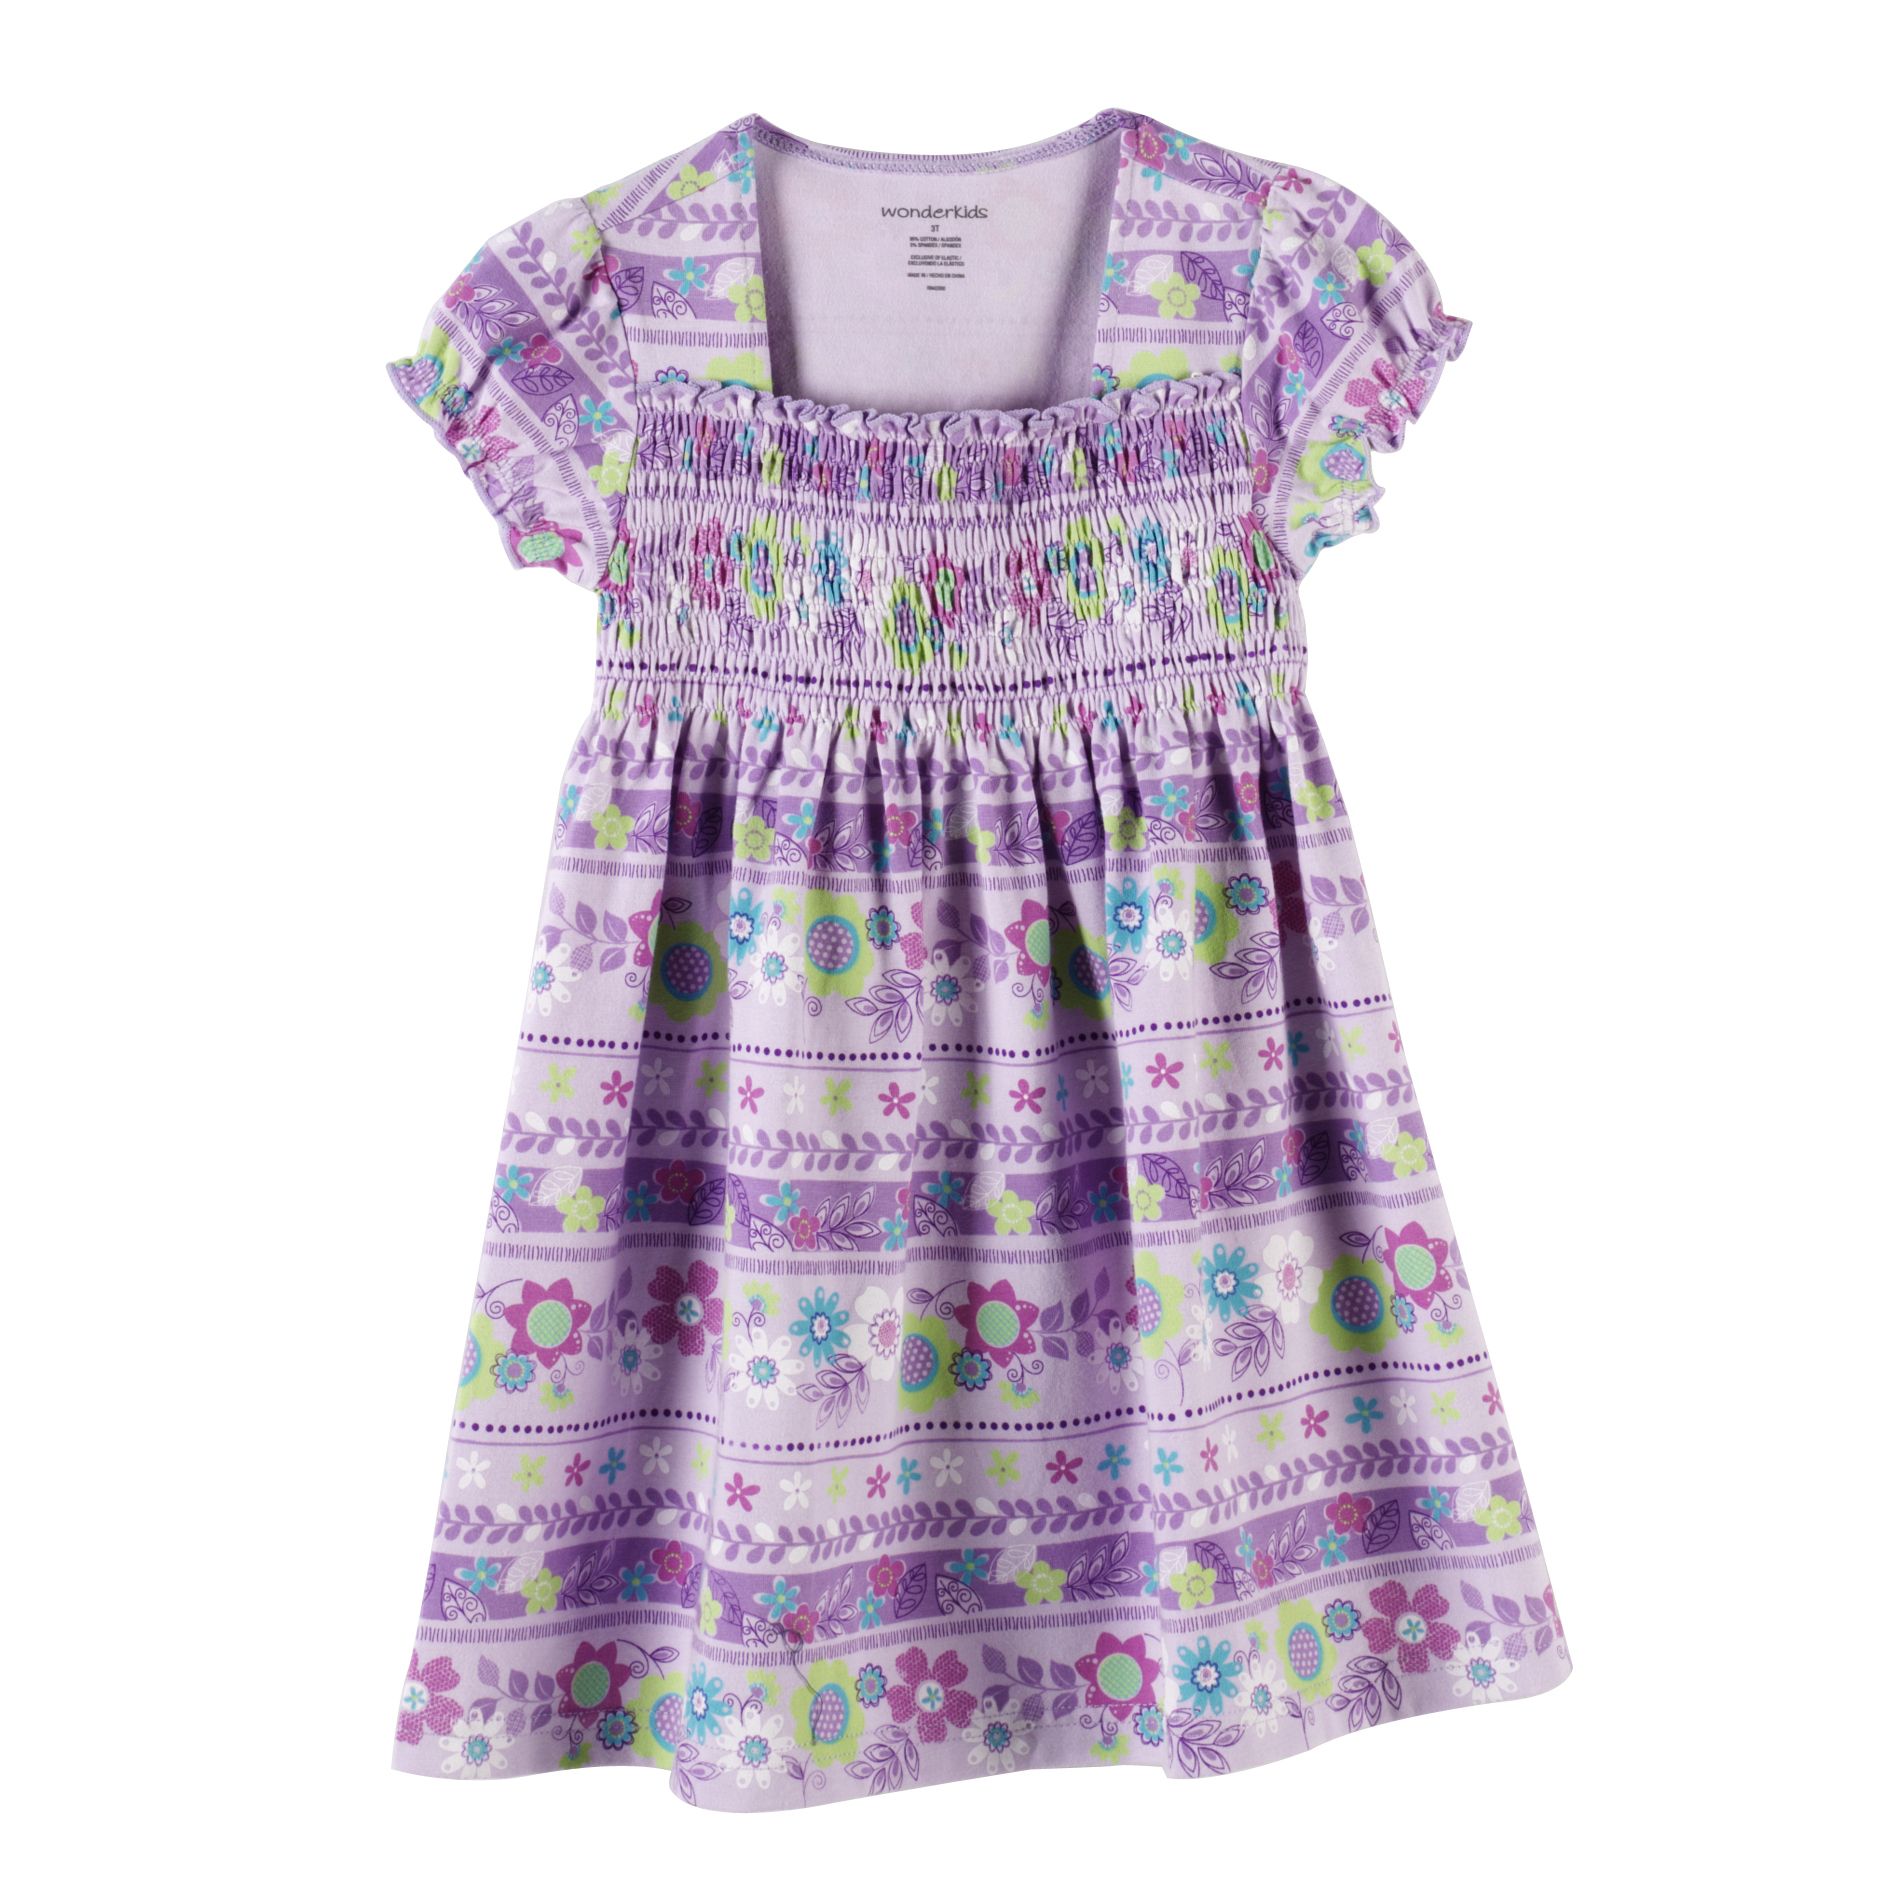 WonderKids Toddler Girl's Floral Print Dress